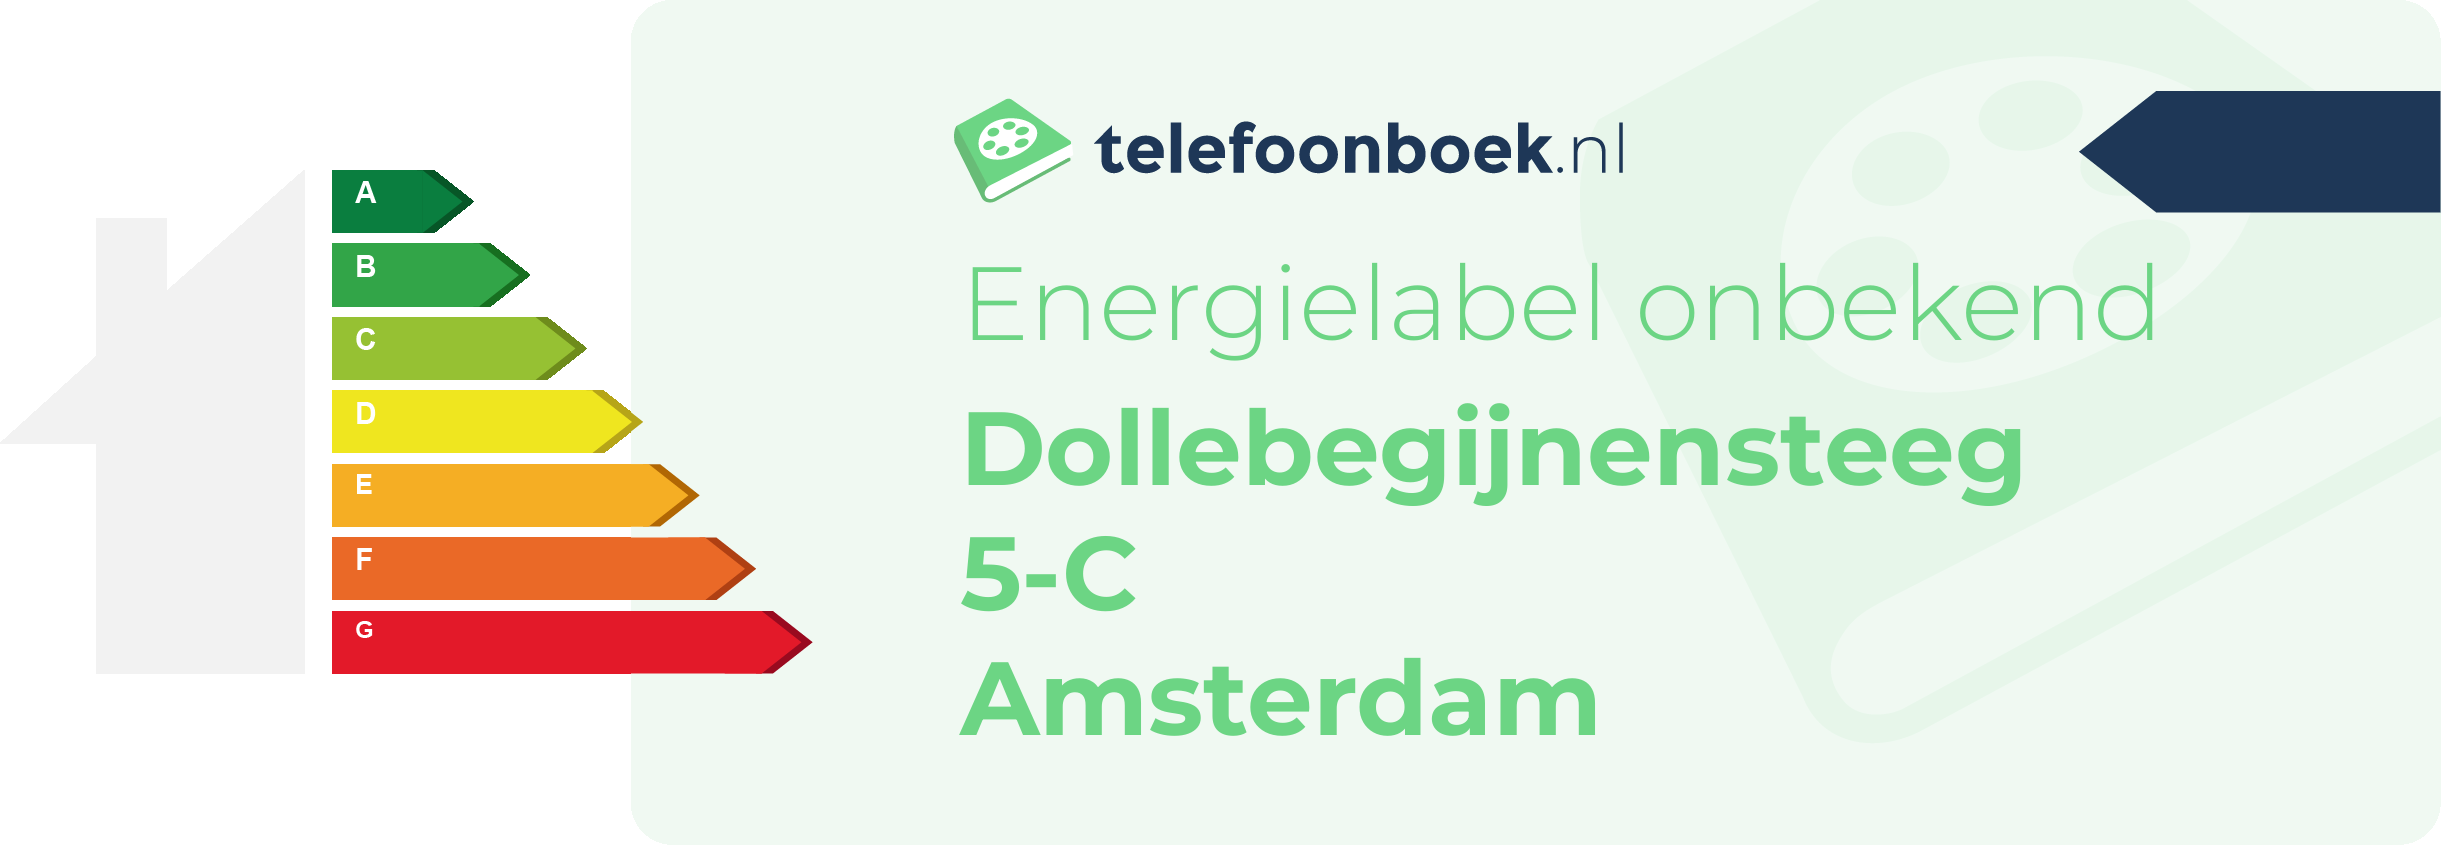 Energielabel Dollebegijnensteeg 5-C Amsterdam